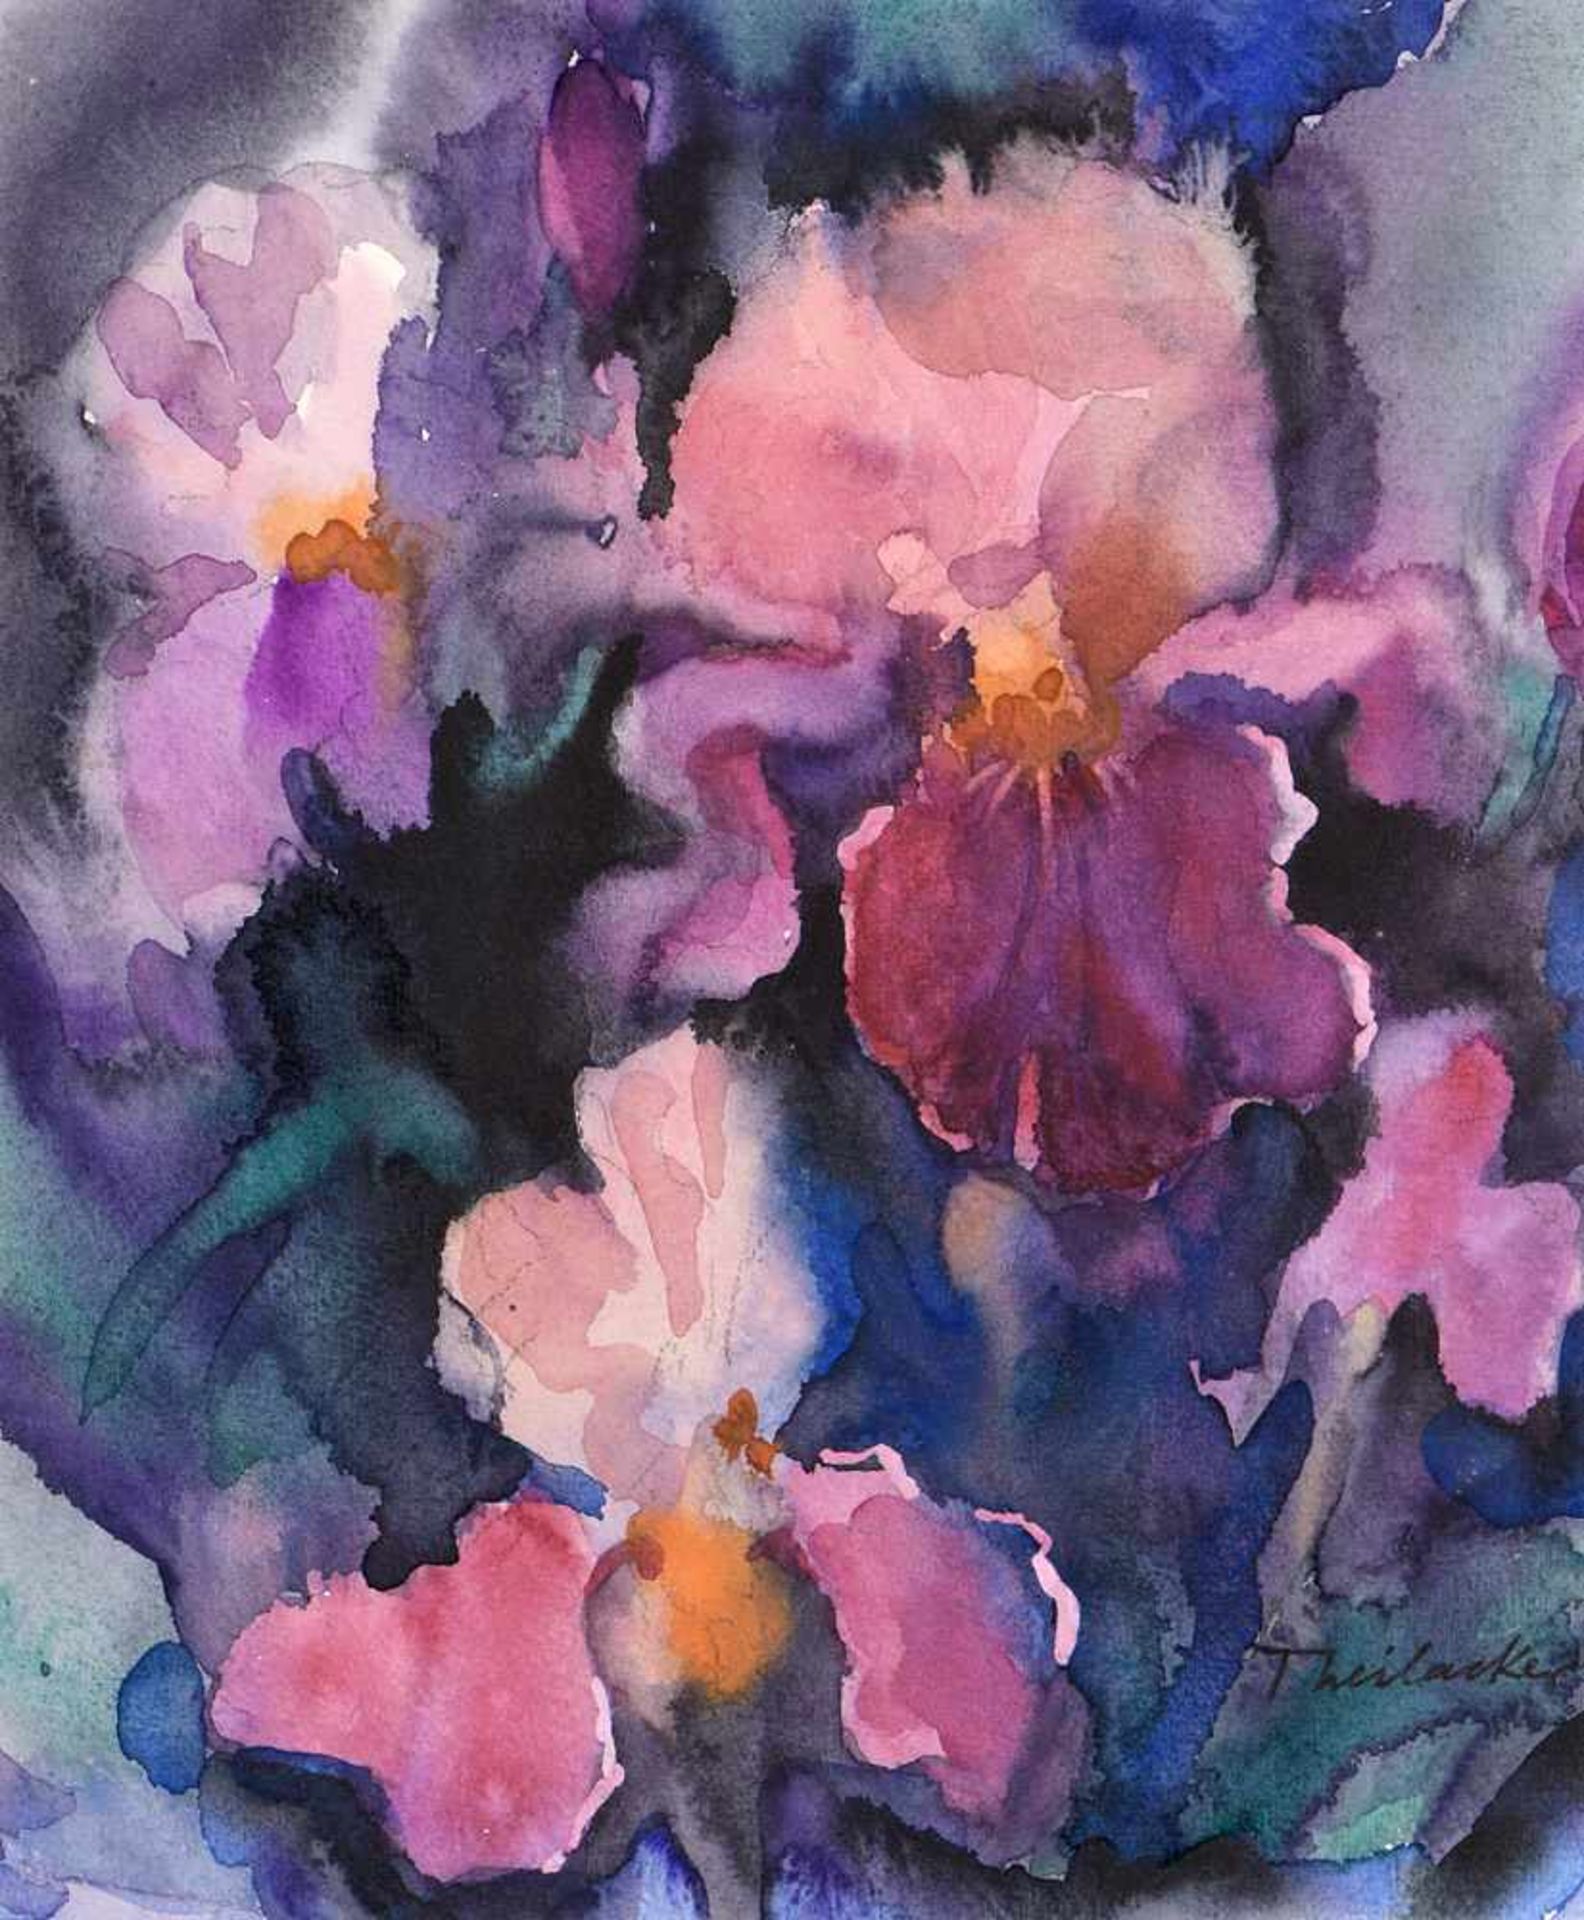 Theilacker, Hans 1928 HeidelbergRosa Iris.Signiert. Aquarell. 26,5 x 21,5 cm.